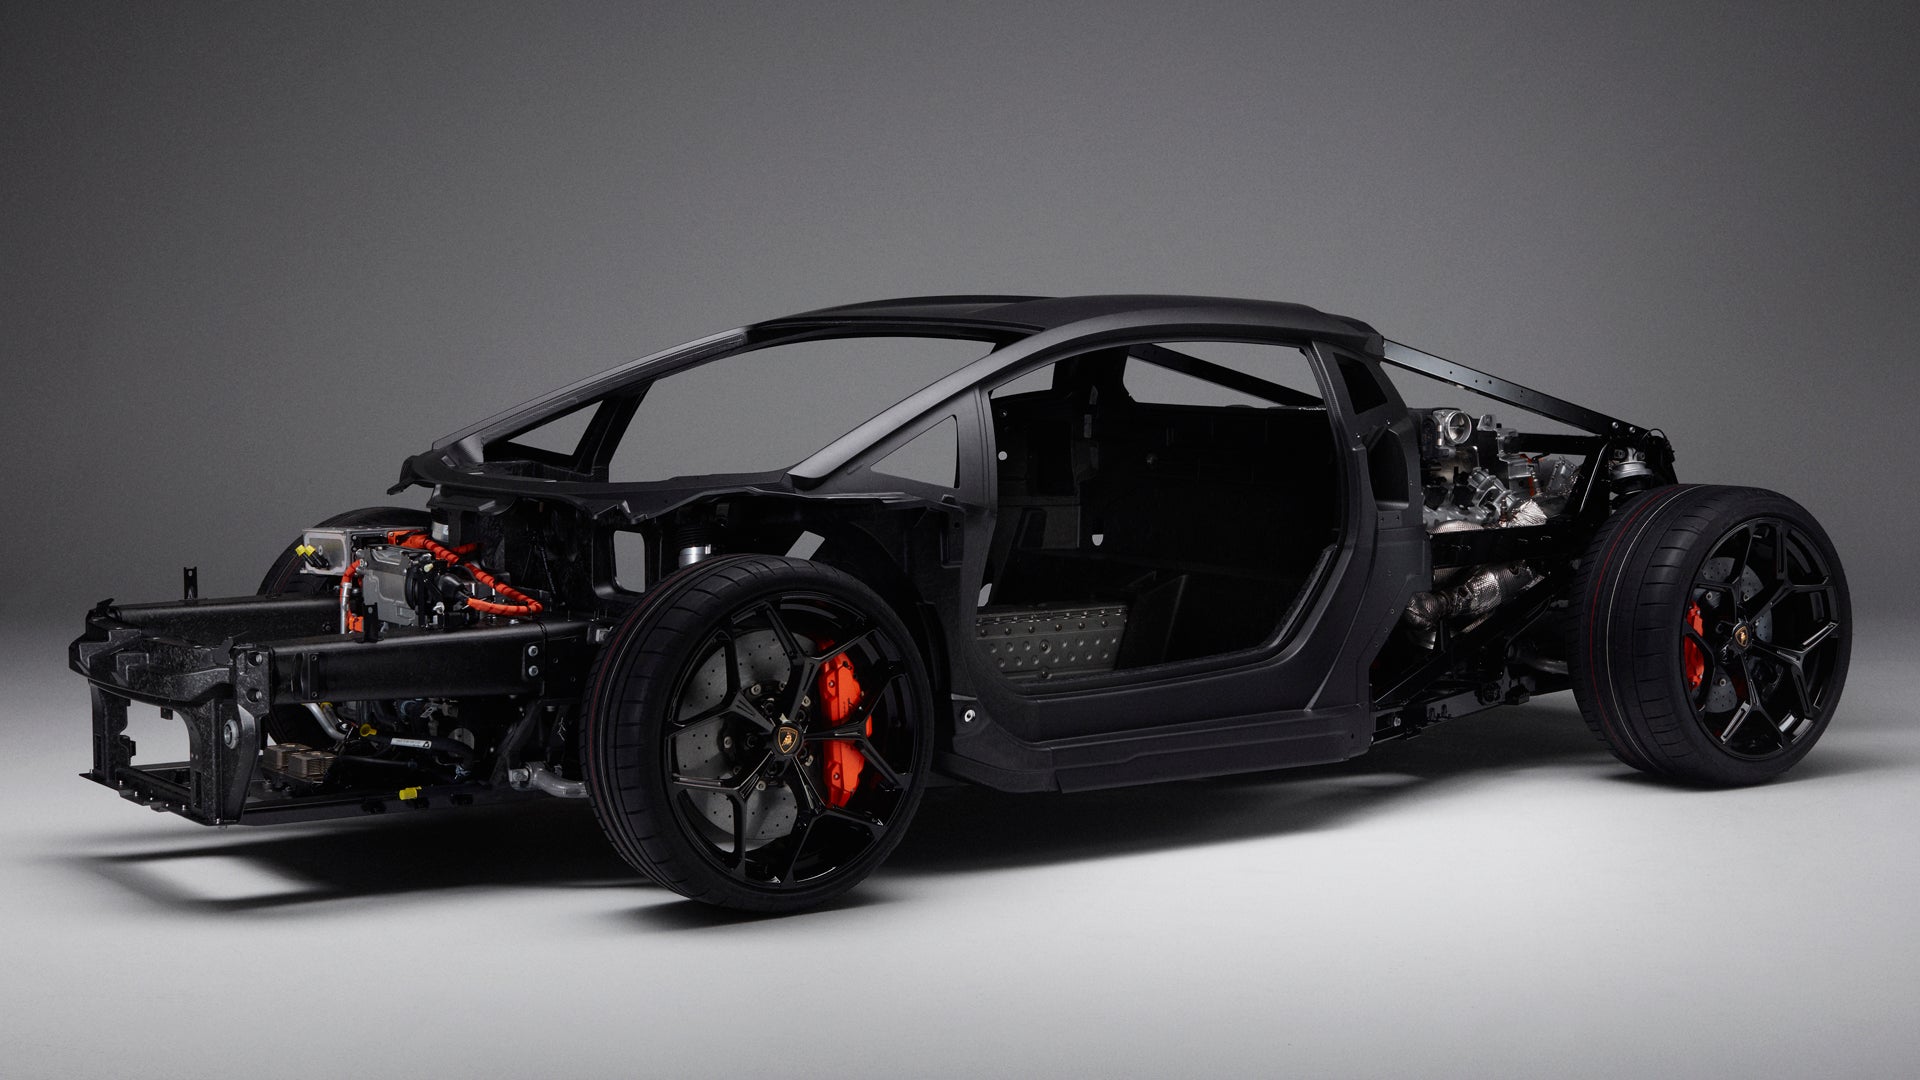 The 1,001-HP Hybrid Lamborghini Super Car Has a Super Light Carbon Fiber Chassis